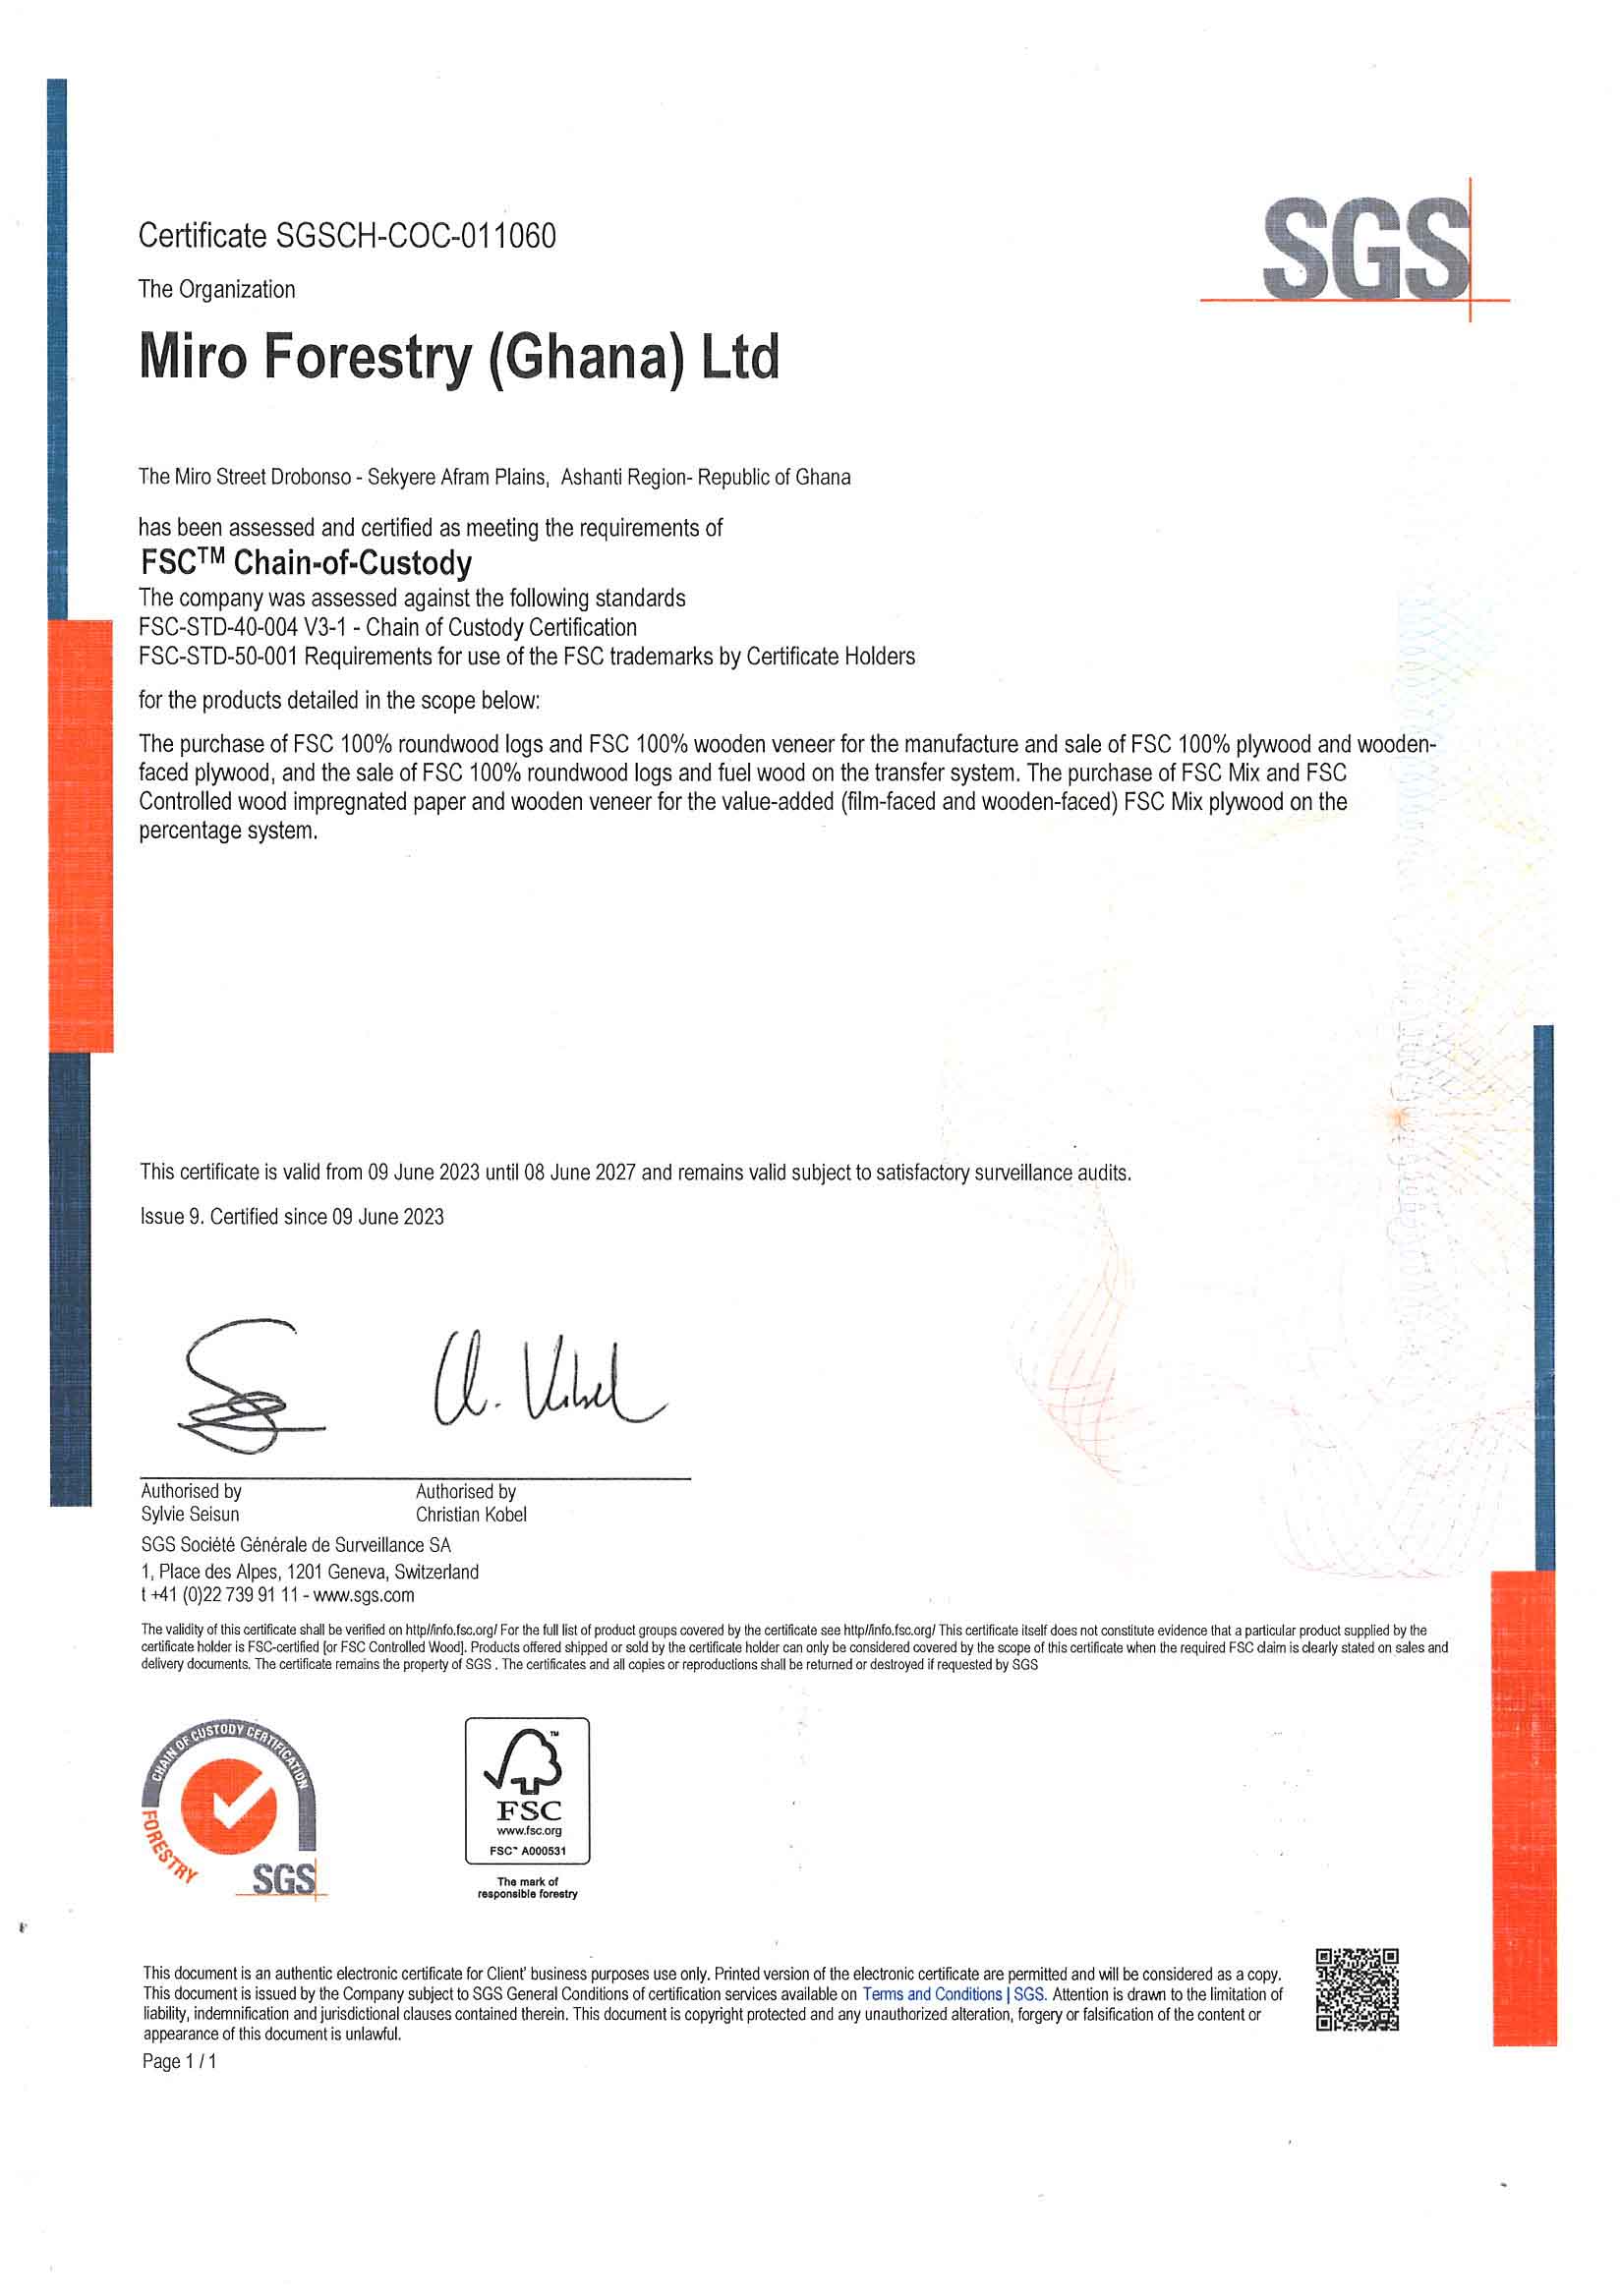 MFGH COC Certificate copy